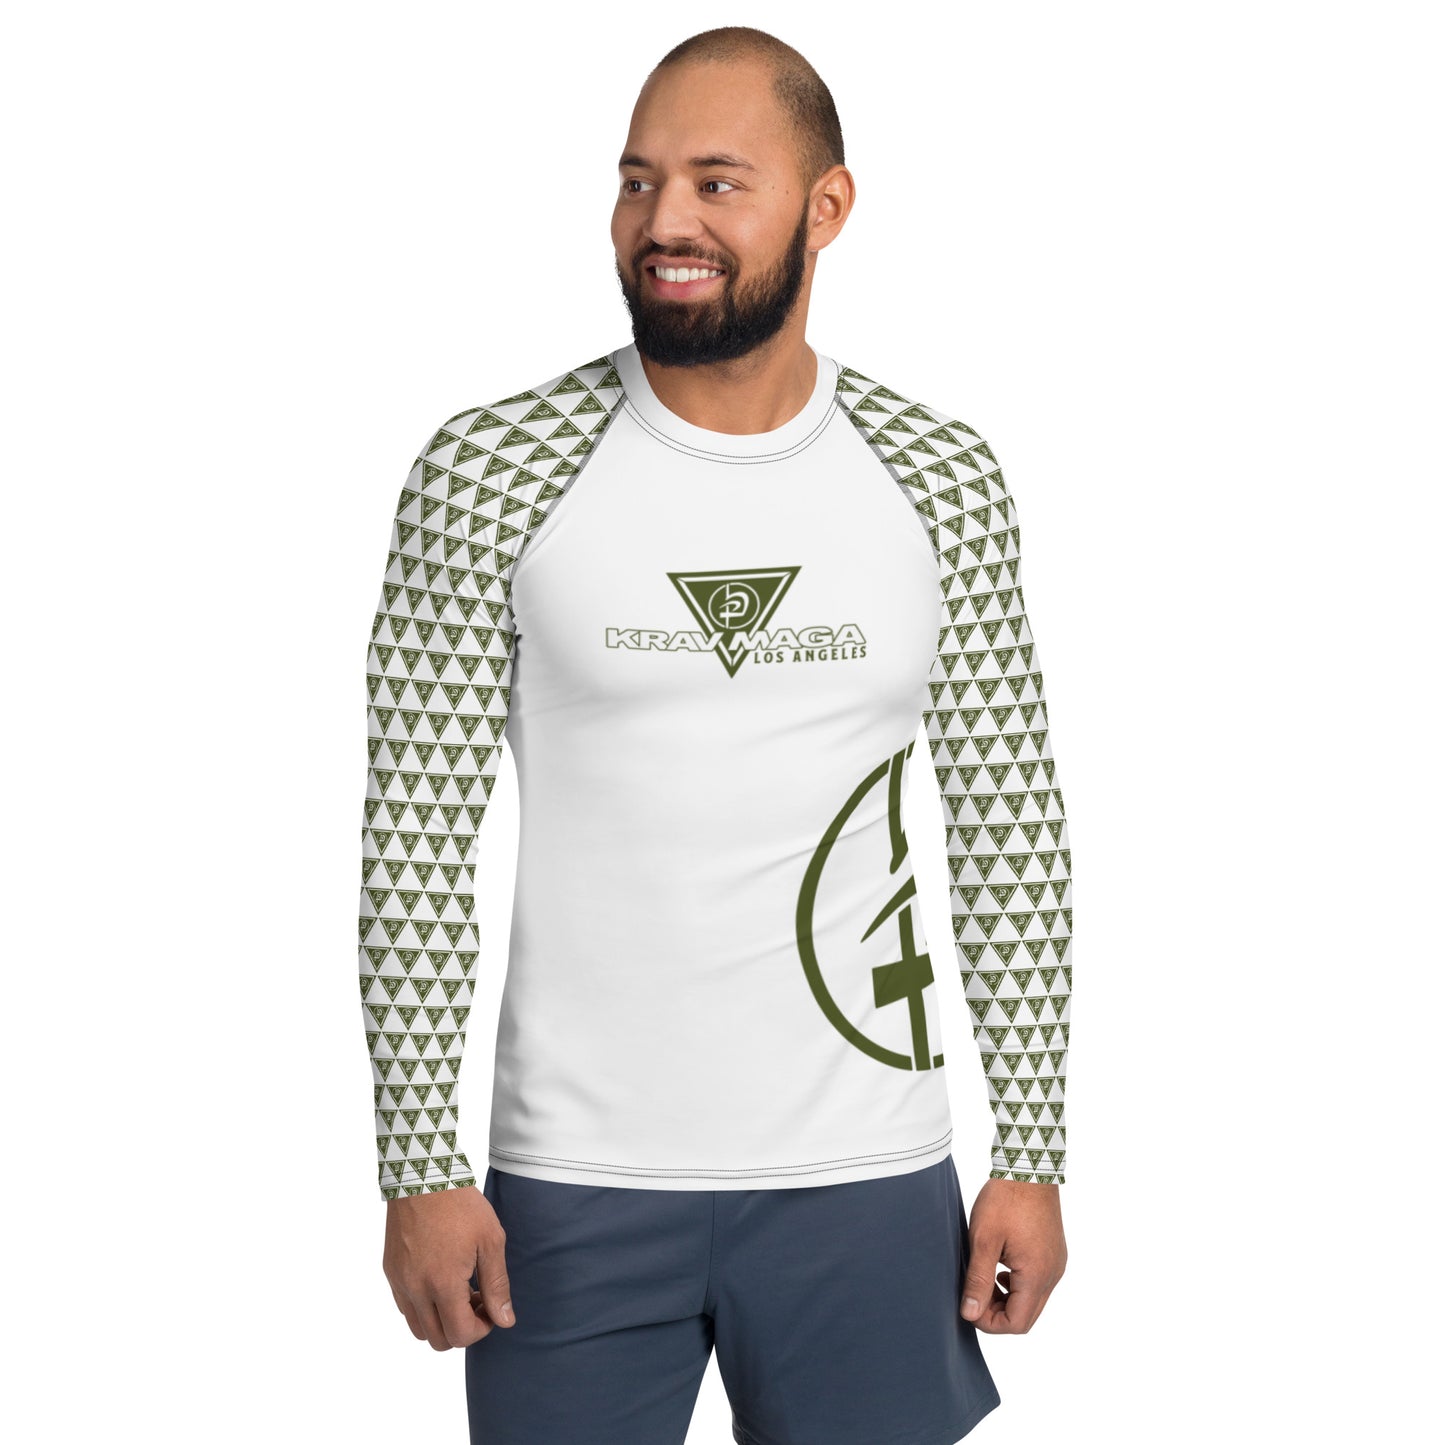 Men's Rash Guard - White/Army Green Triangles